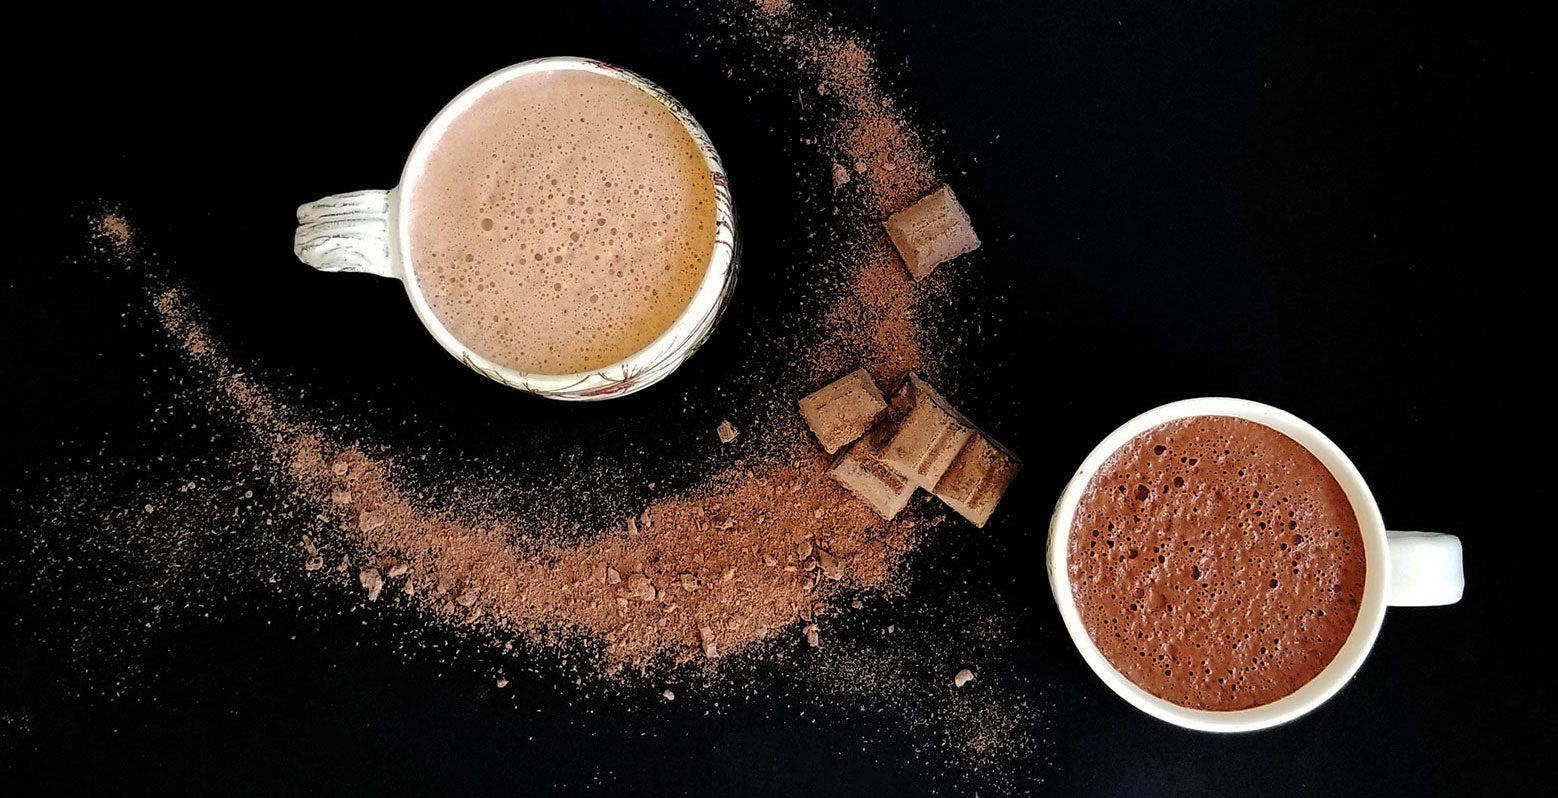 milk and dark hot chocolate drinks - bean to bar